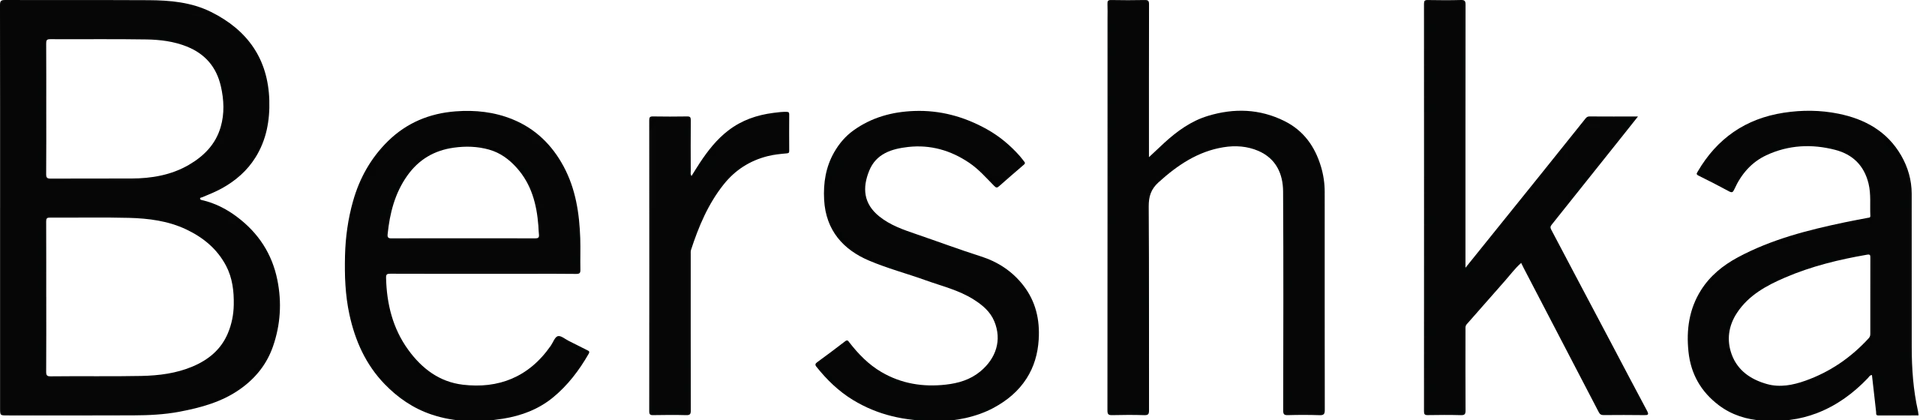 BERSHKA logo of current catalogue